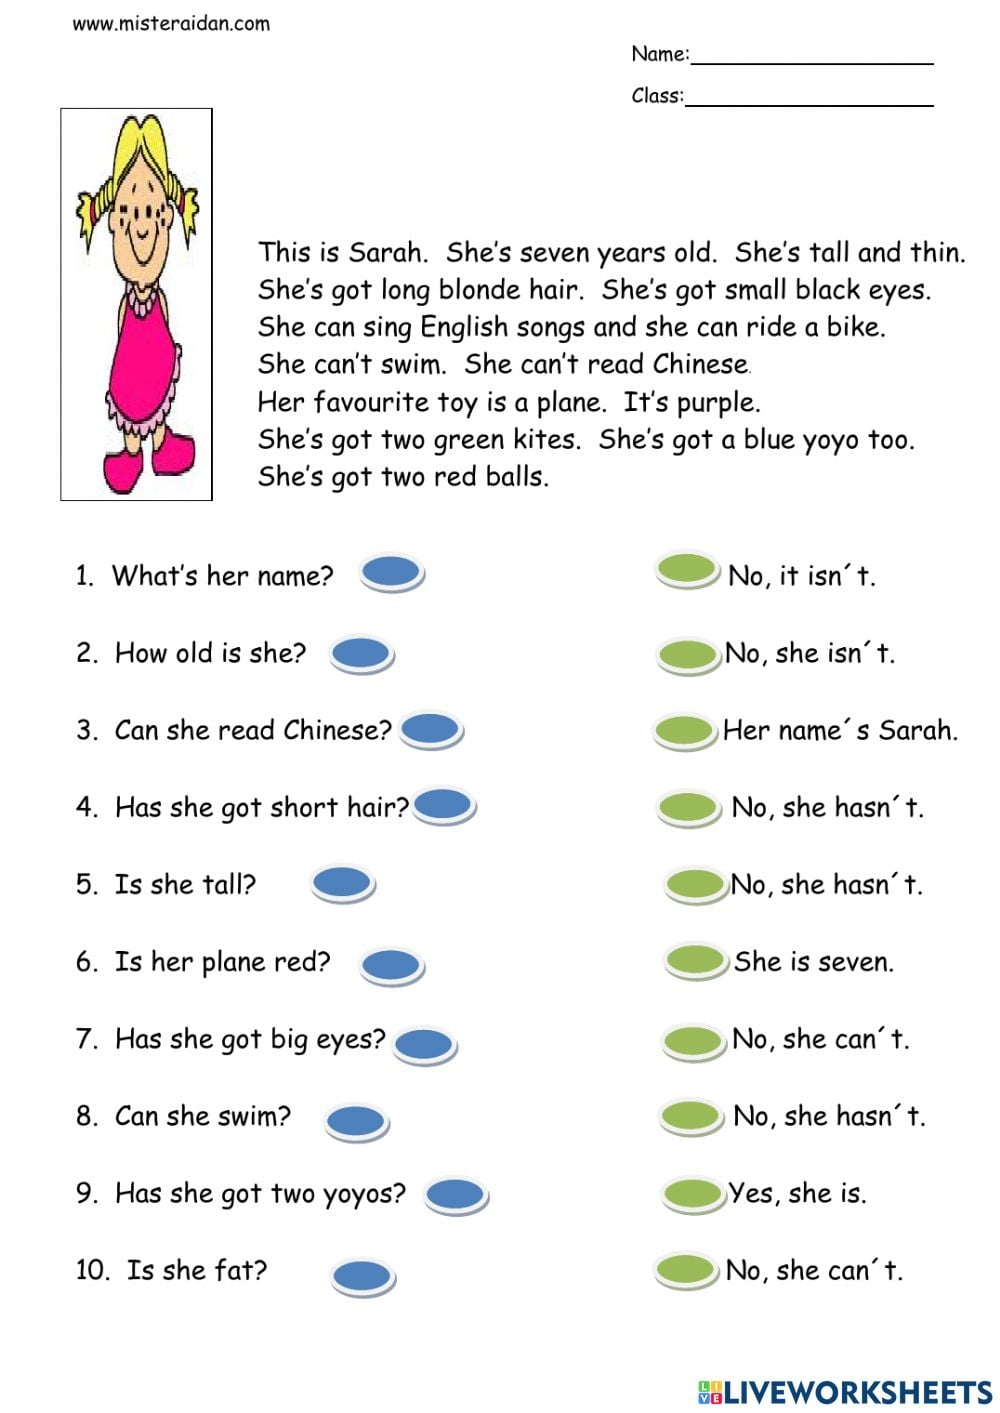 Simple Reading Comprehension Worksheets